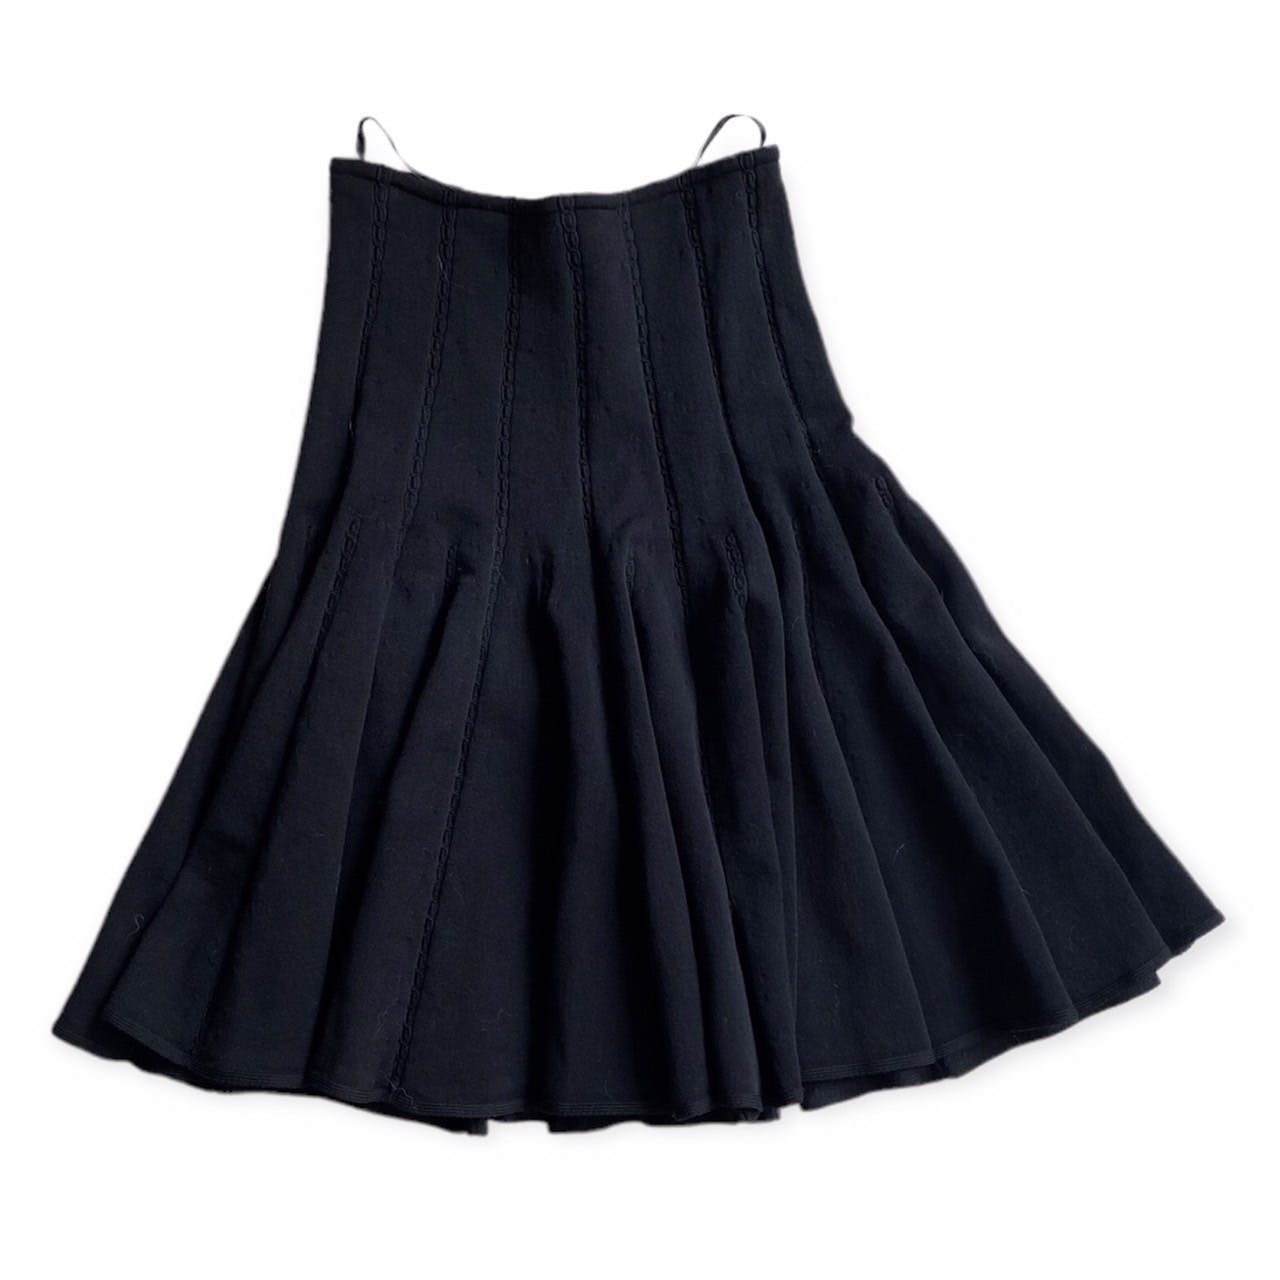 Alaia stretch wool skirt - 1